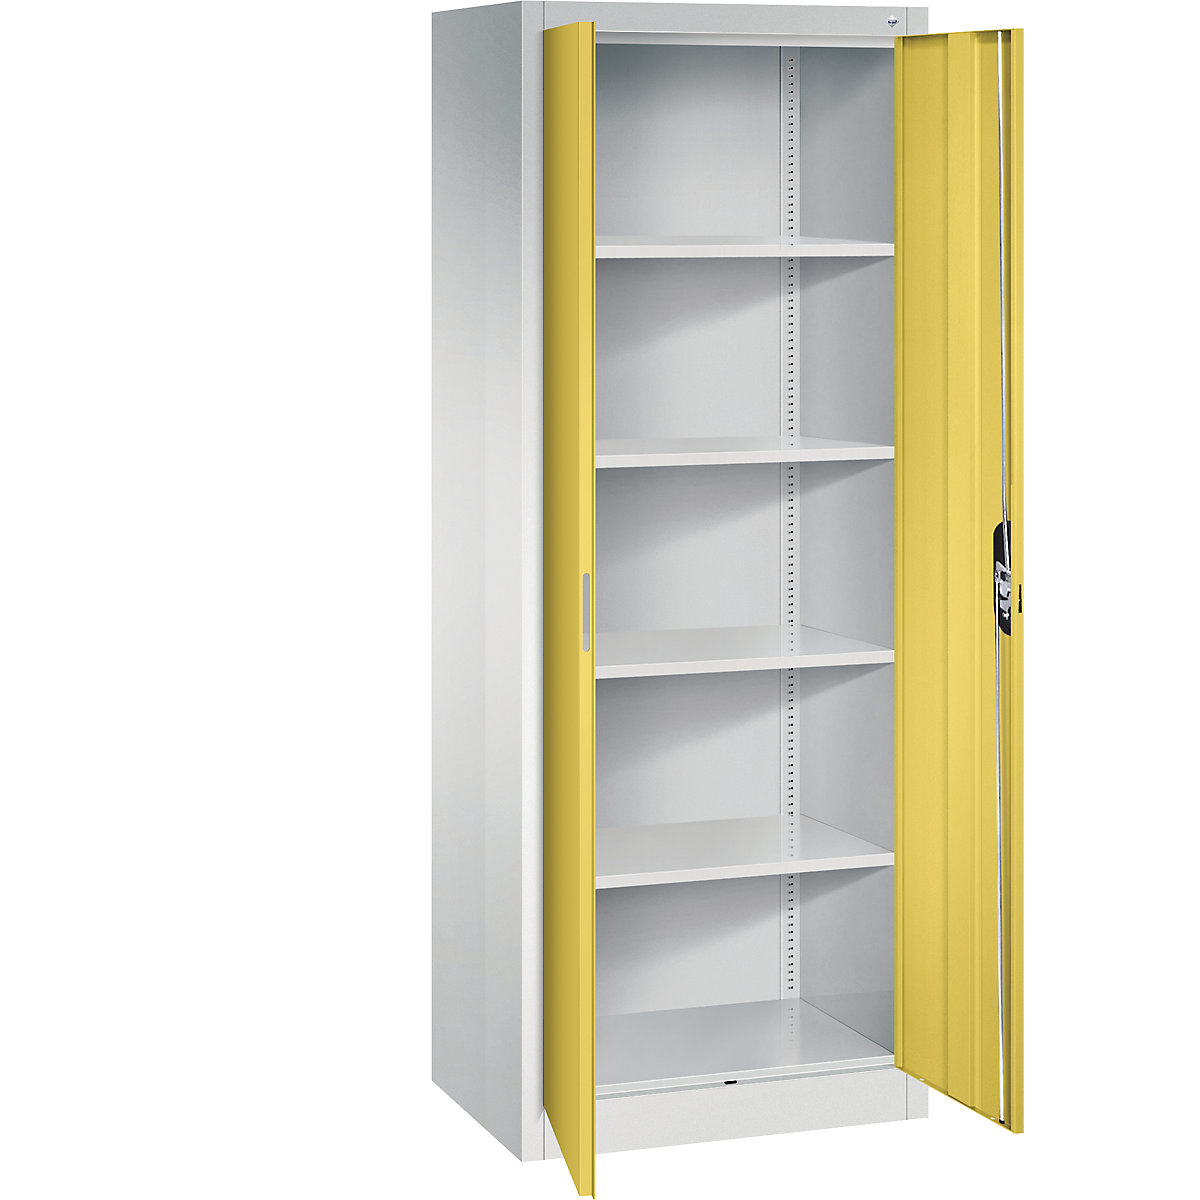 C+P – ACURADO universal cupboard, WxD 700 x 500 mm, light grey / sun yellow